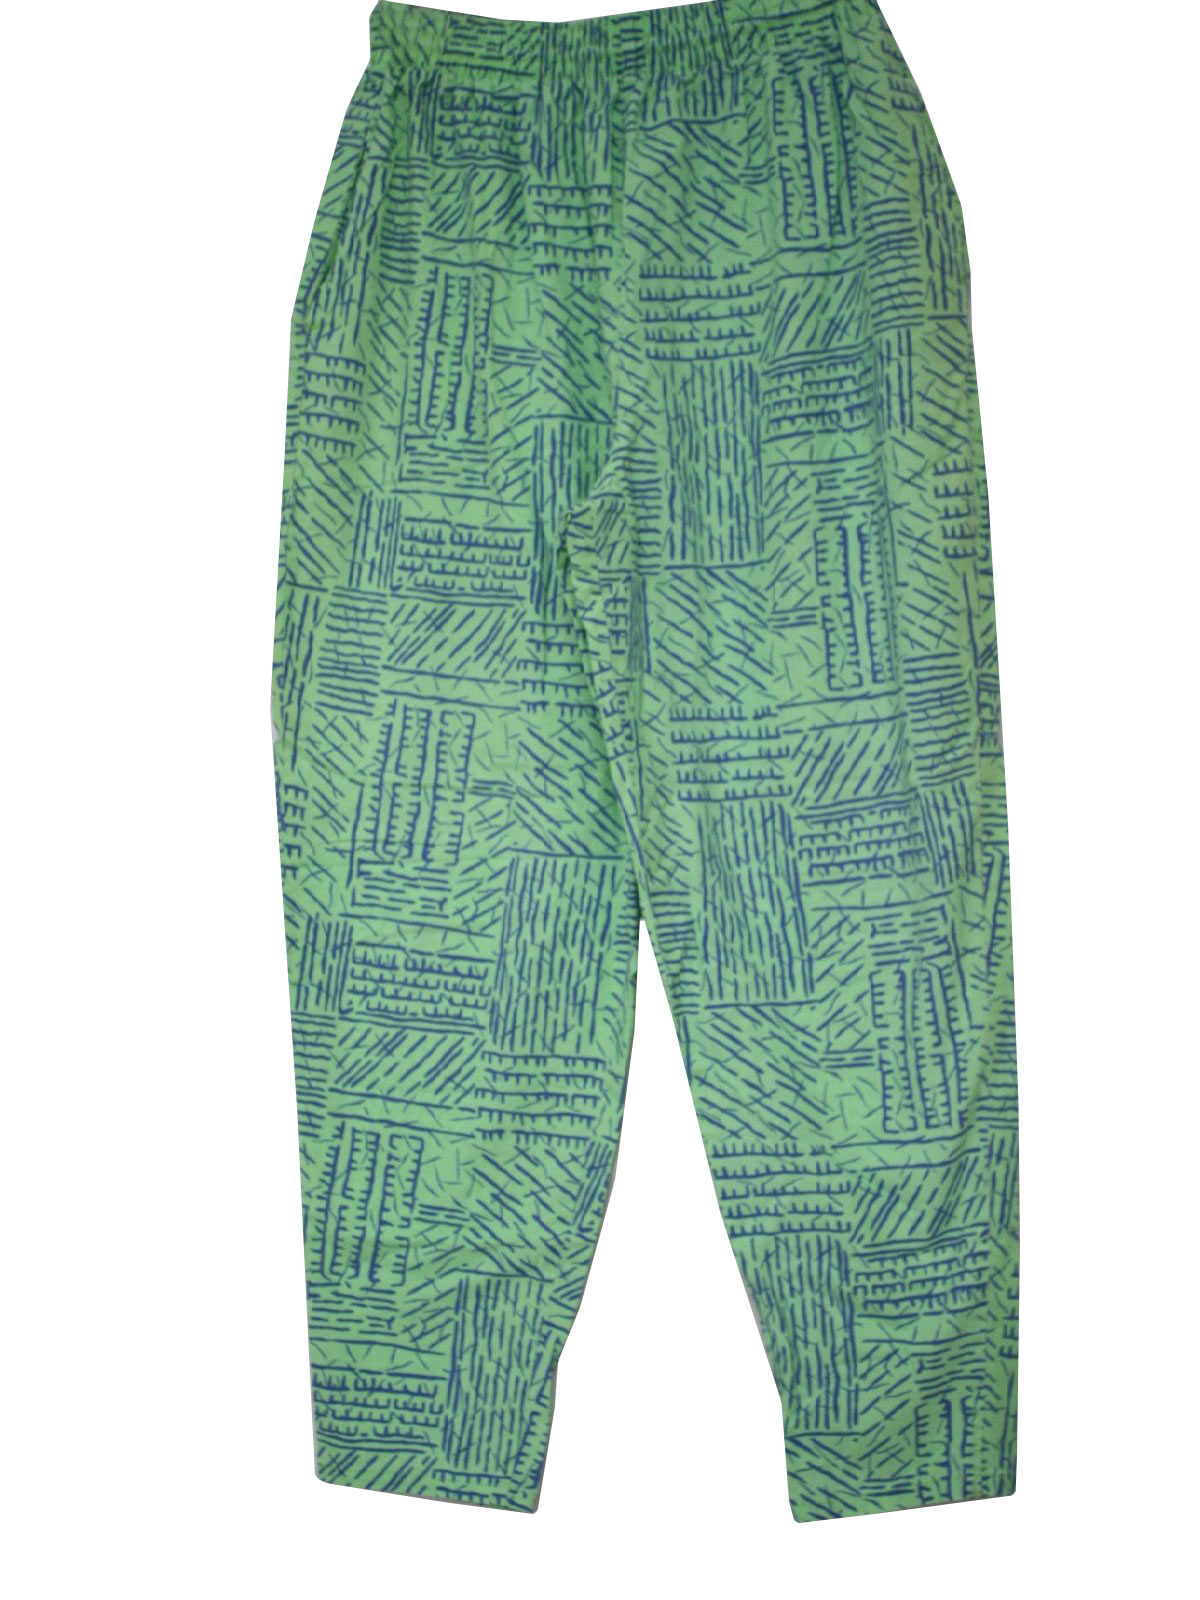 Retro 1980's Pants (Double Take) : 80s -Double Take- Mens bright green ...